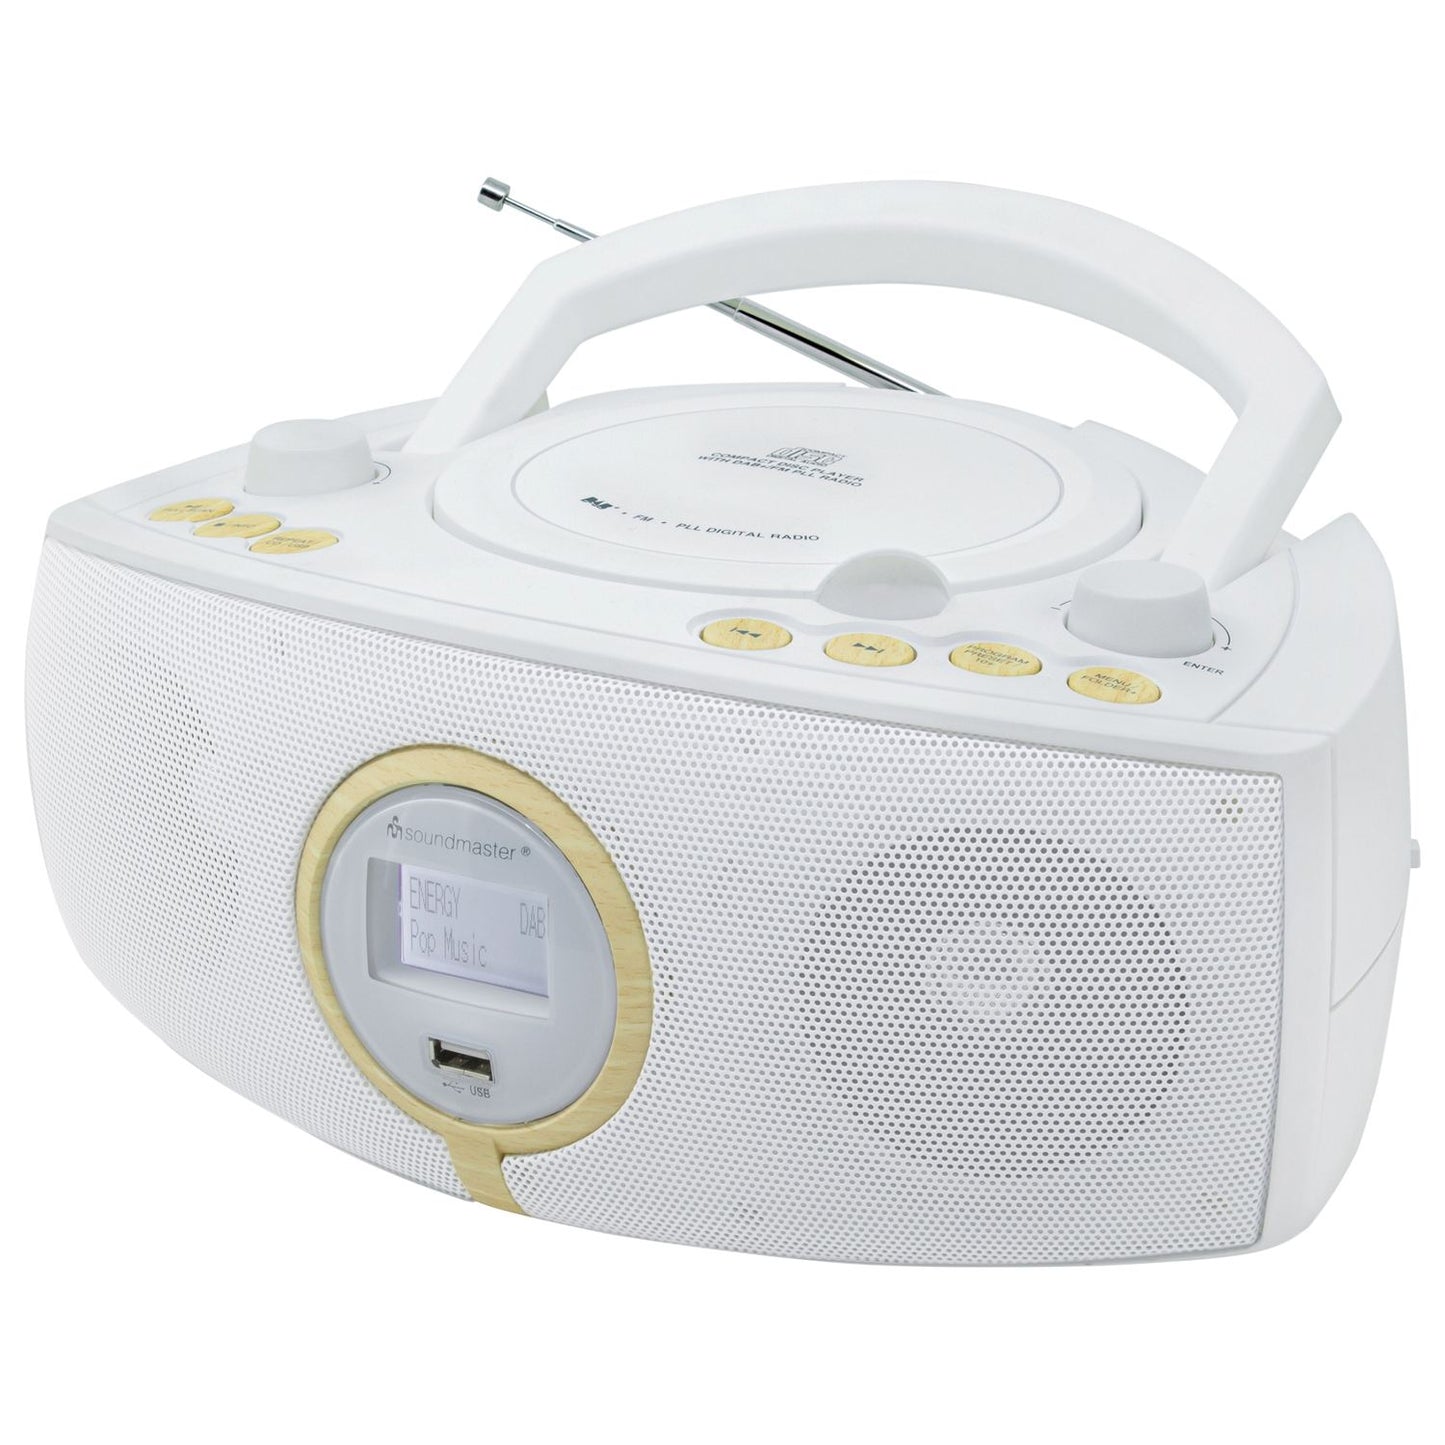 Radio stéréo DAB+/FM-PLL Soundmaster SCD1500, CD/MP3, différentes couleurs